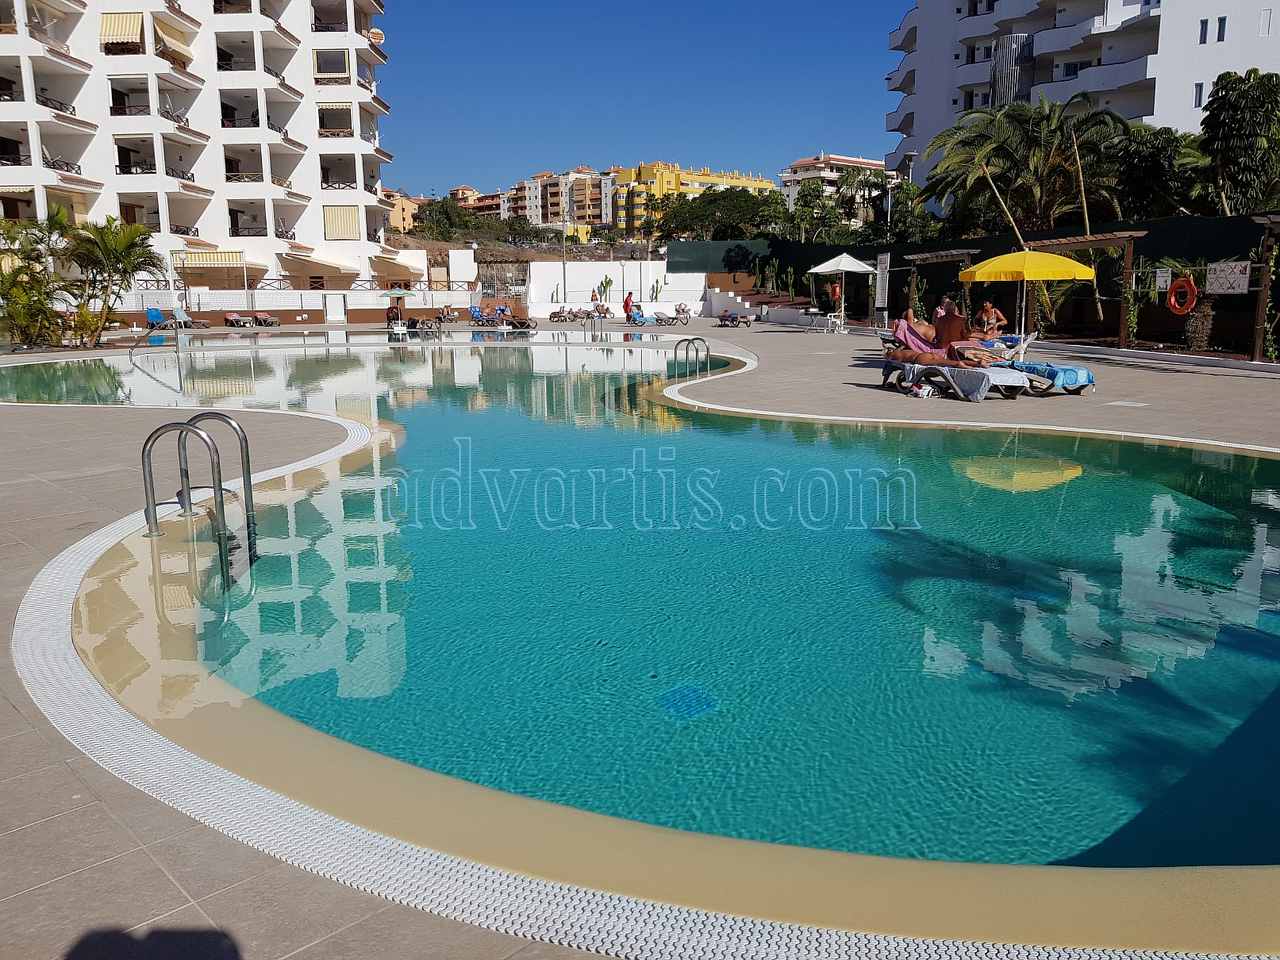 1 bedroom apartment for sale in San Marino complex, Tenerife €215.000